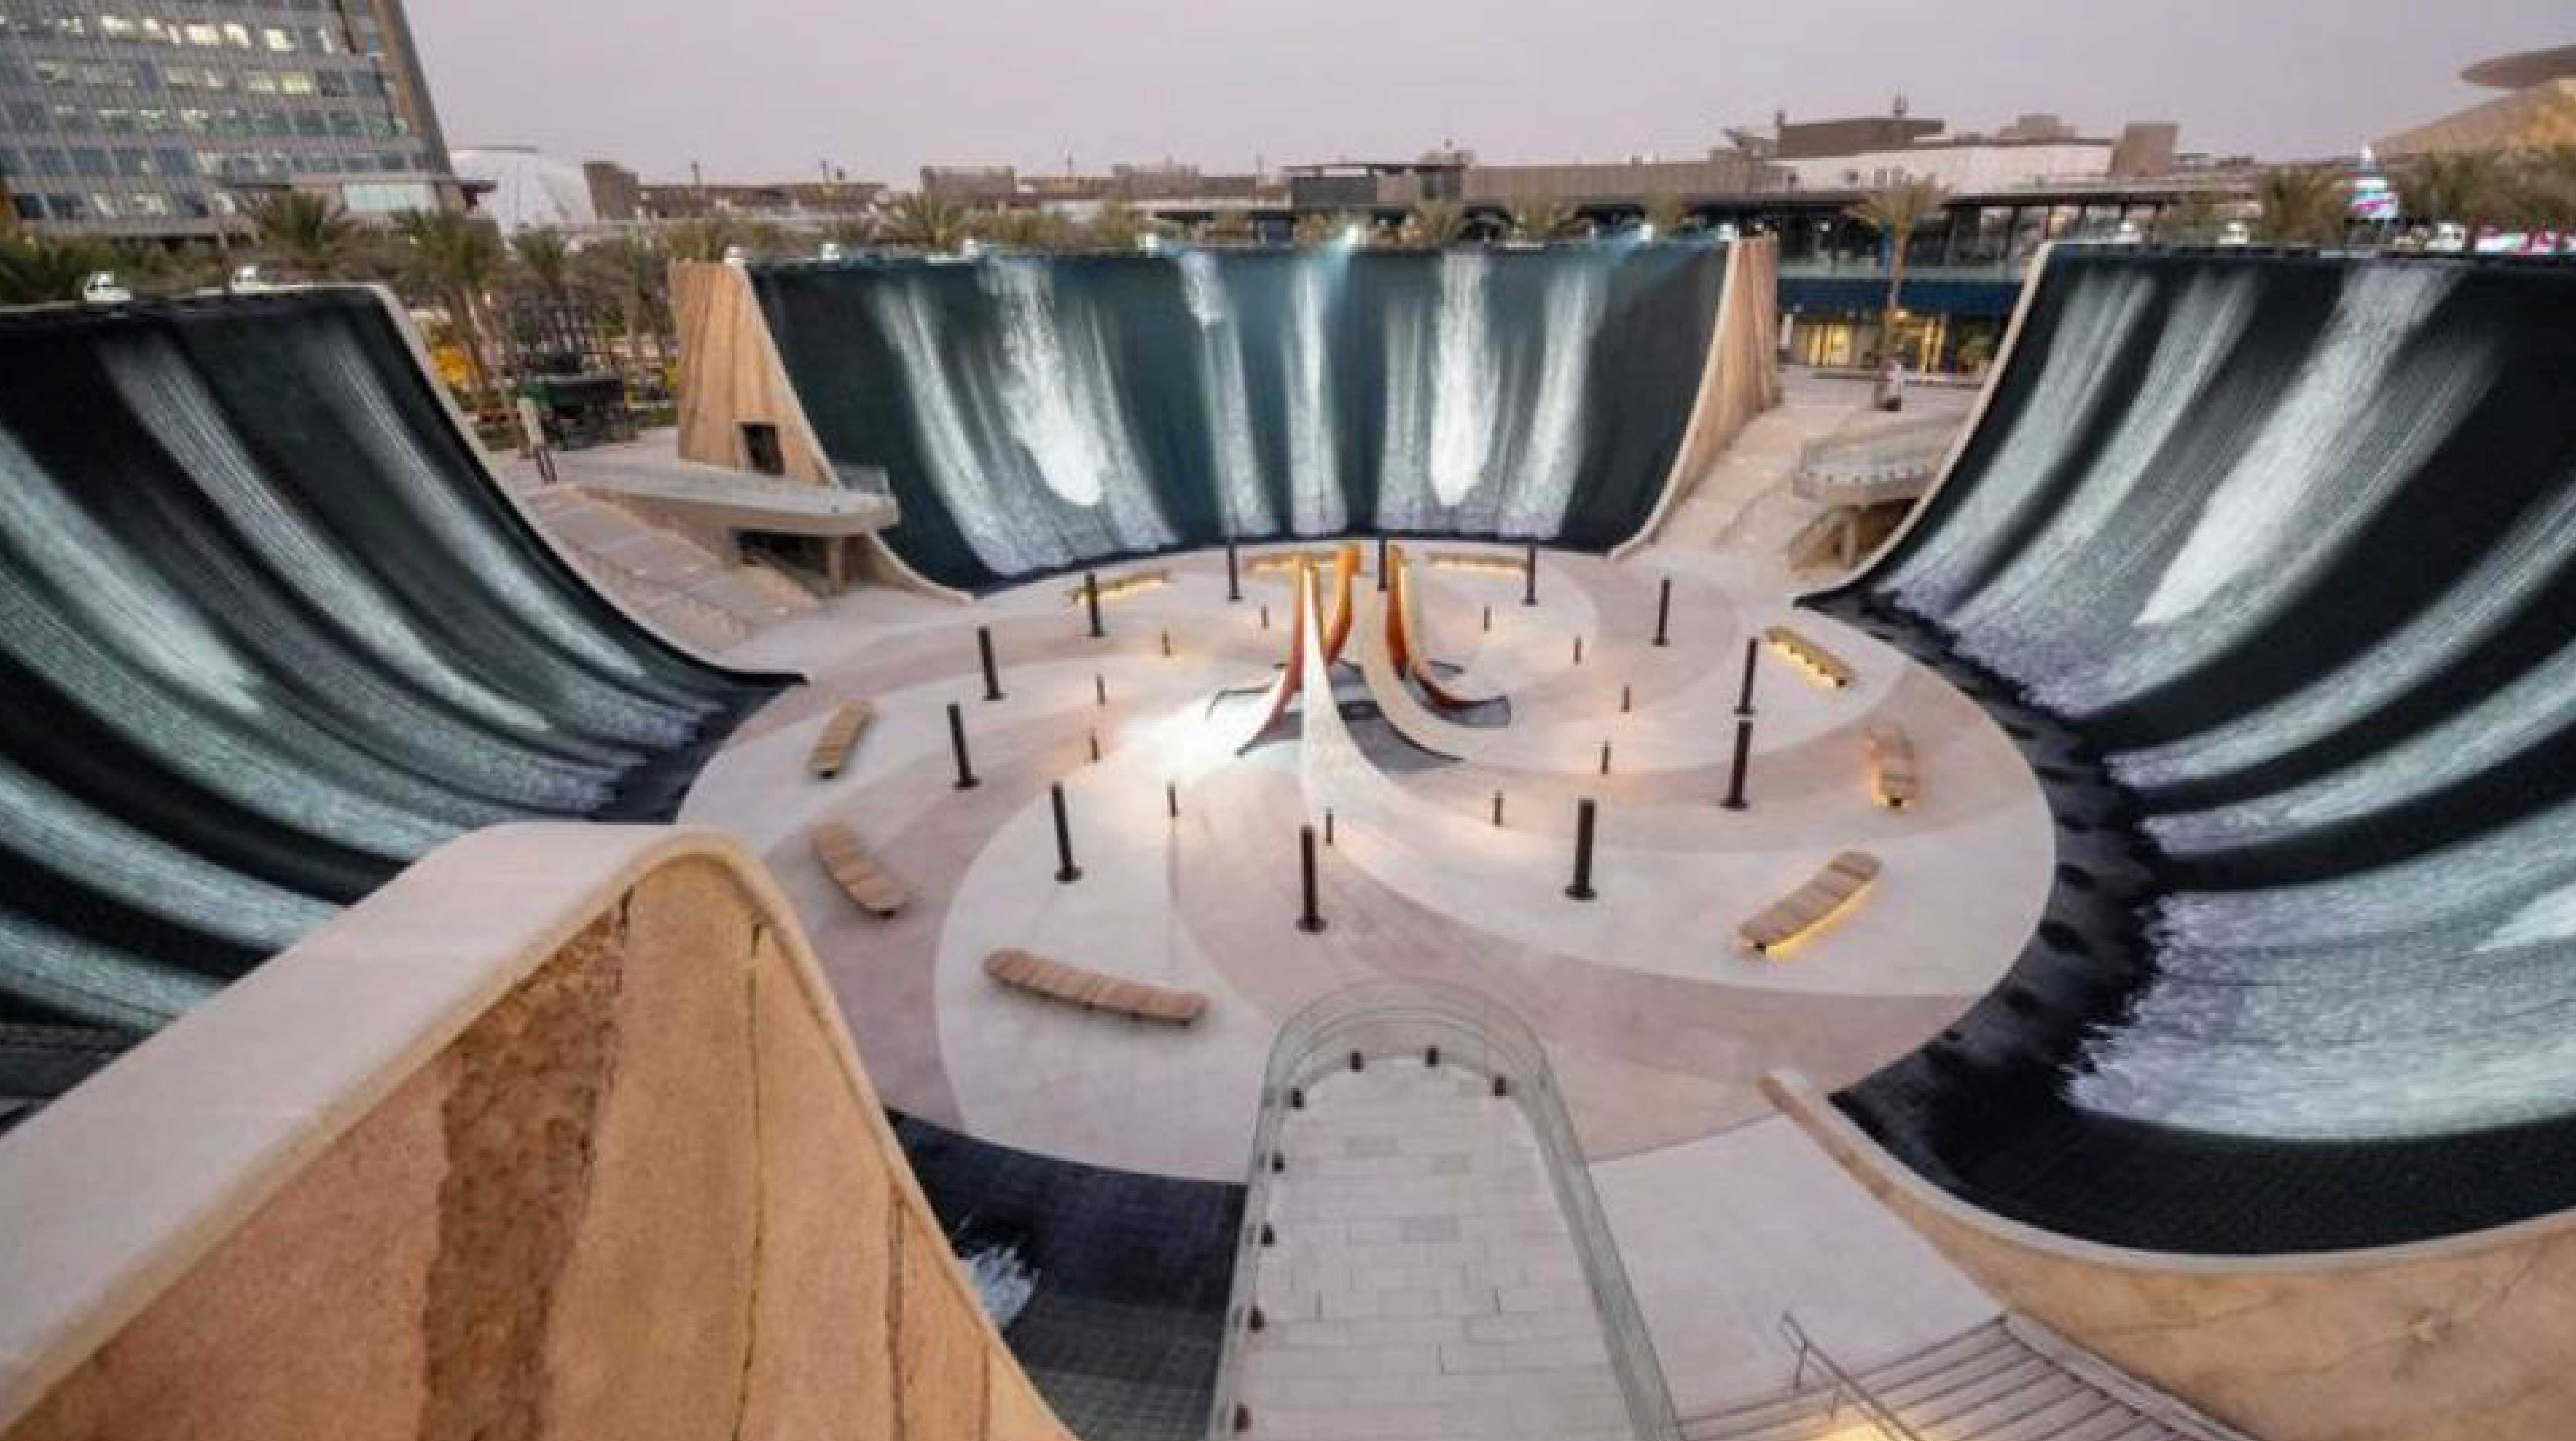 SURREAL WATERFALLS - DUBAI EXPO